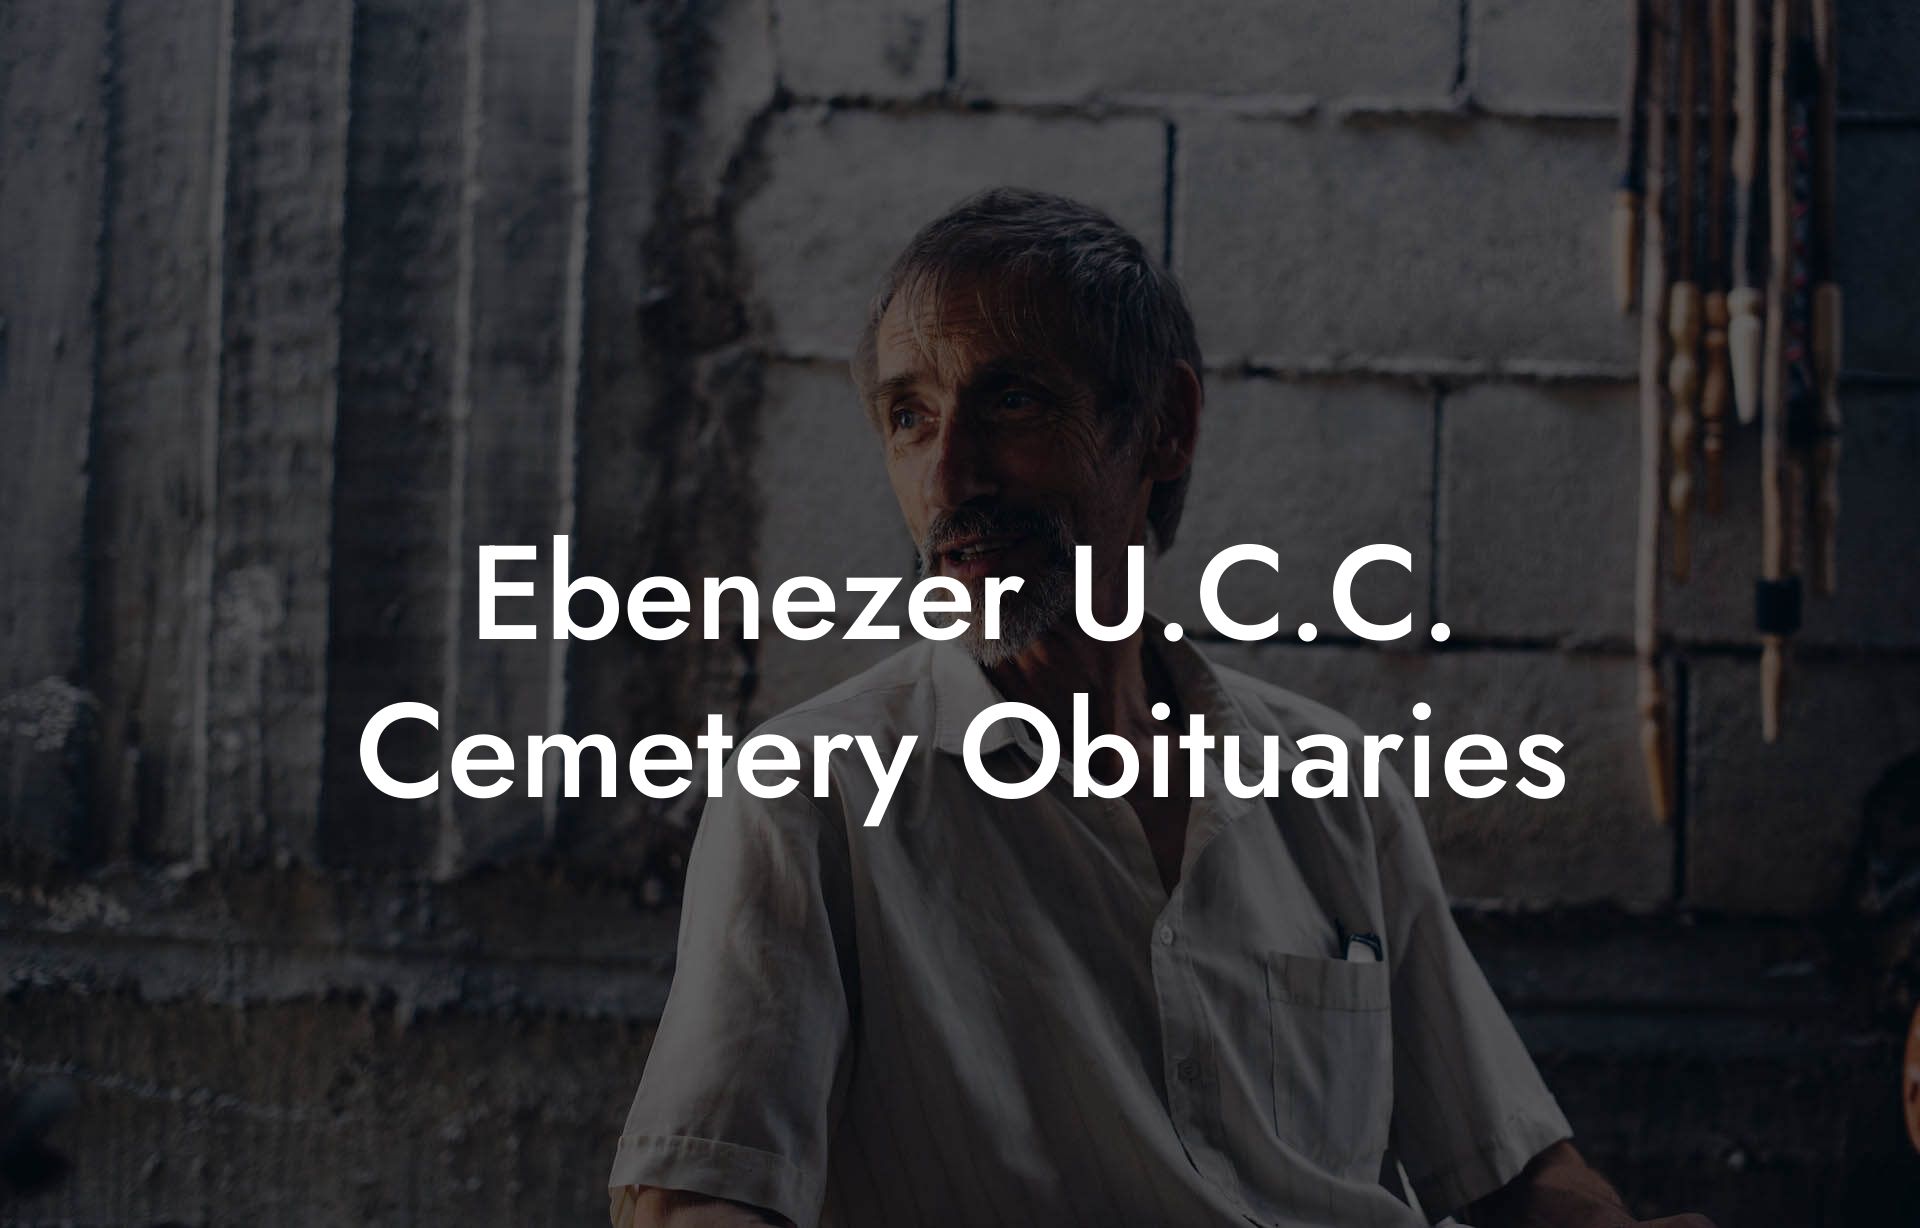 Ebenezer U.C.C. Cemetery Obituaries